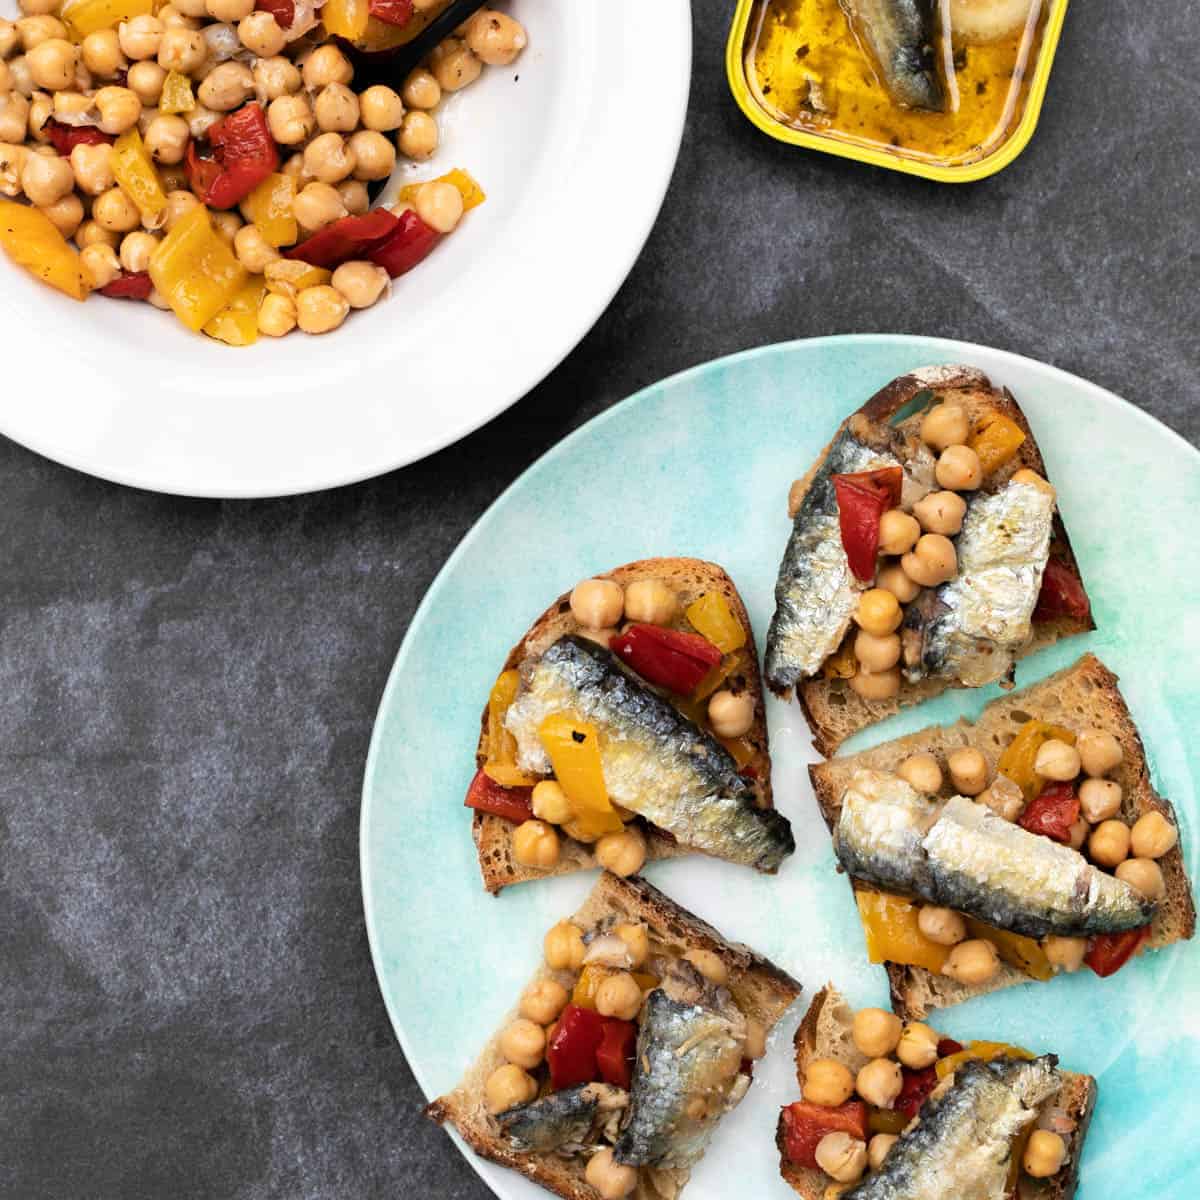 sardines on toast with chickpea salad on plate next to bowl of chickpea salad and sardine tin